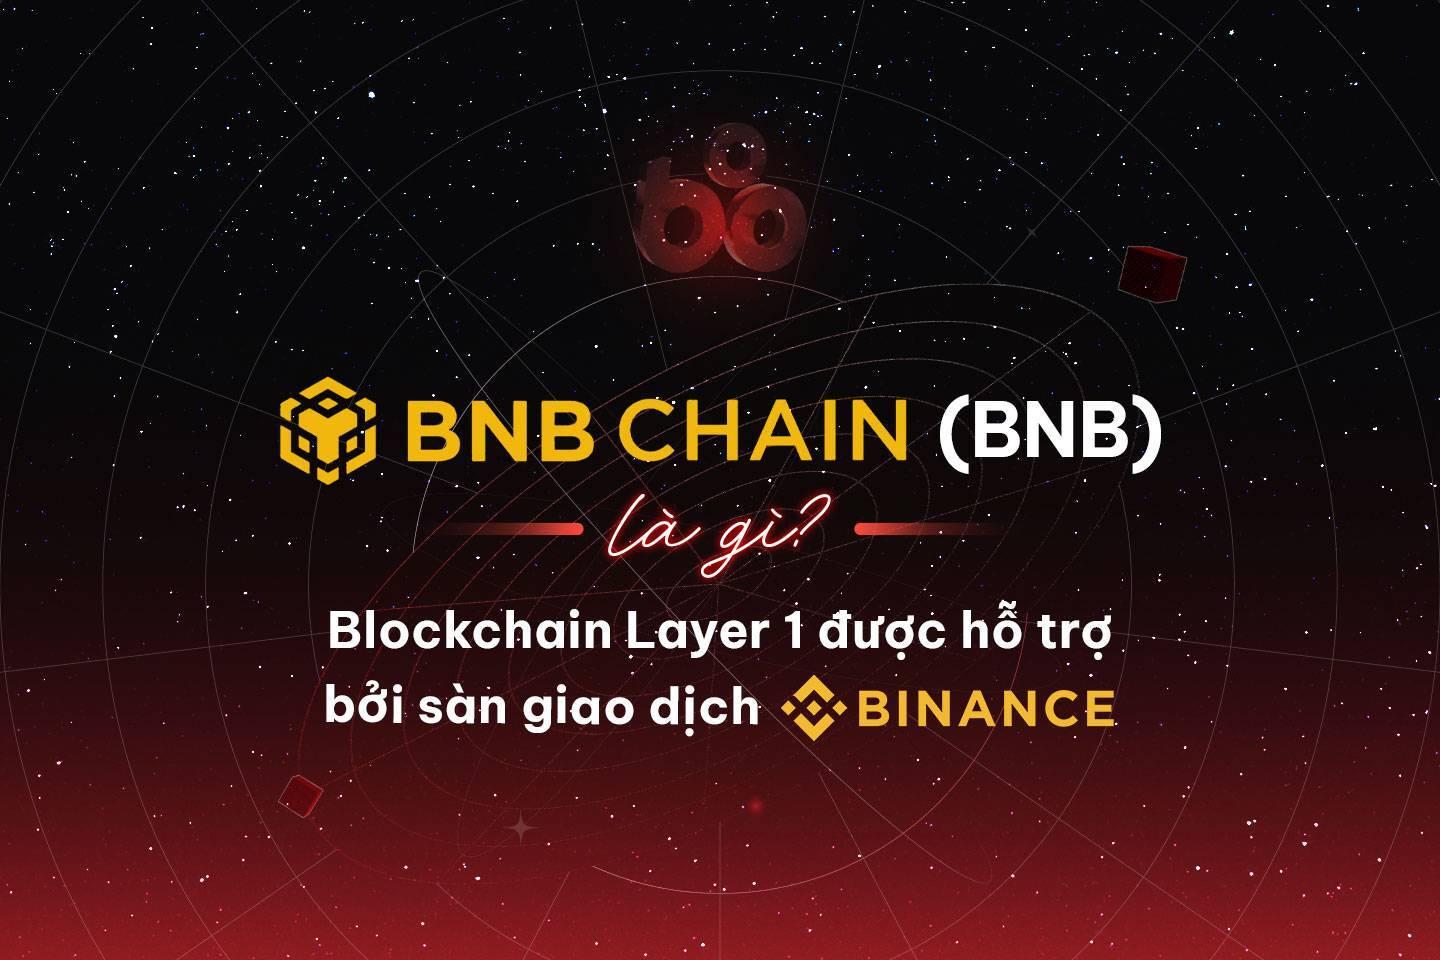 bnb-chain-bnb-la-gi-blockchain-layer-1-duoc-ho-tro-boi-san-giao-dich-binance